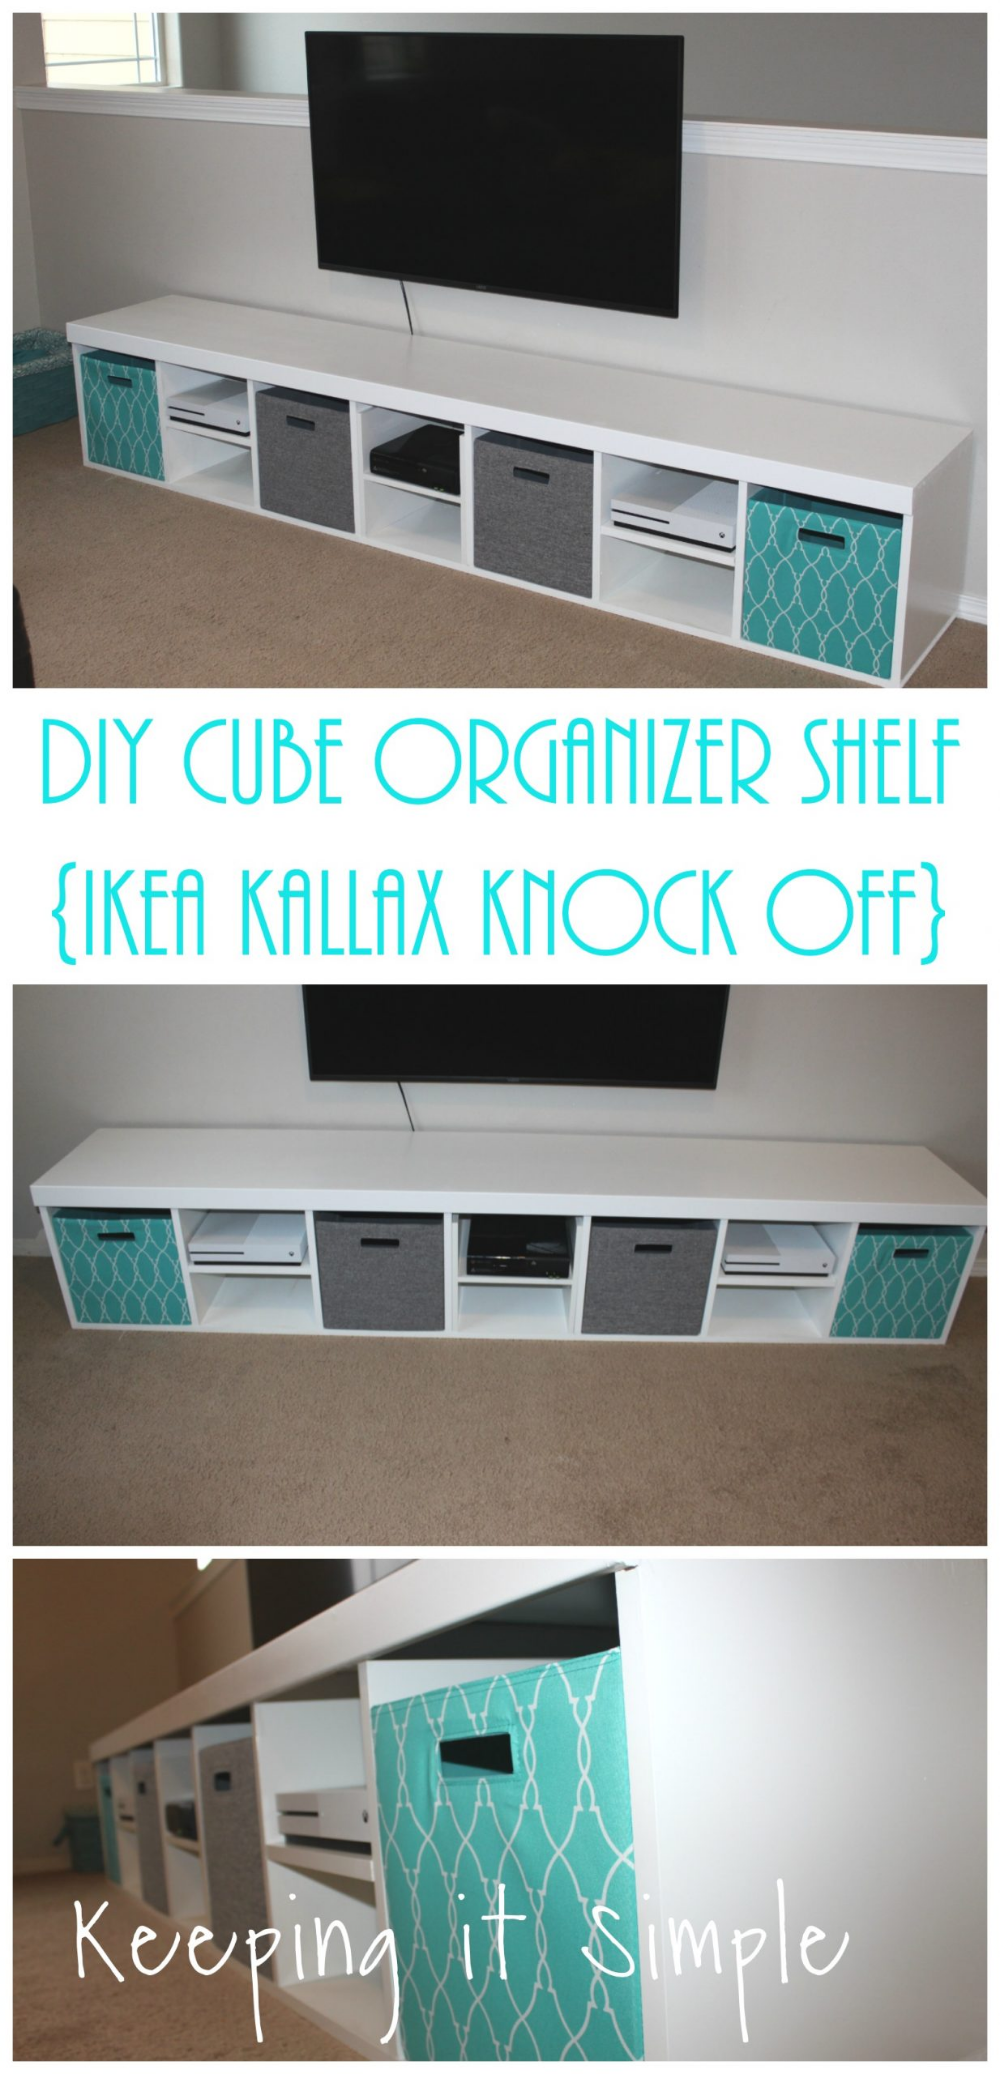 DIY Cube Organizer Shelf- IKEA Kallax Knock Off • Keeping it Simple - DIY Cube Organizer Shelf- IKEA Kallax Knock Off • Keeping it Simple -   15 diy Organization shelf ideas